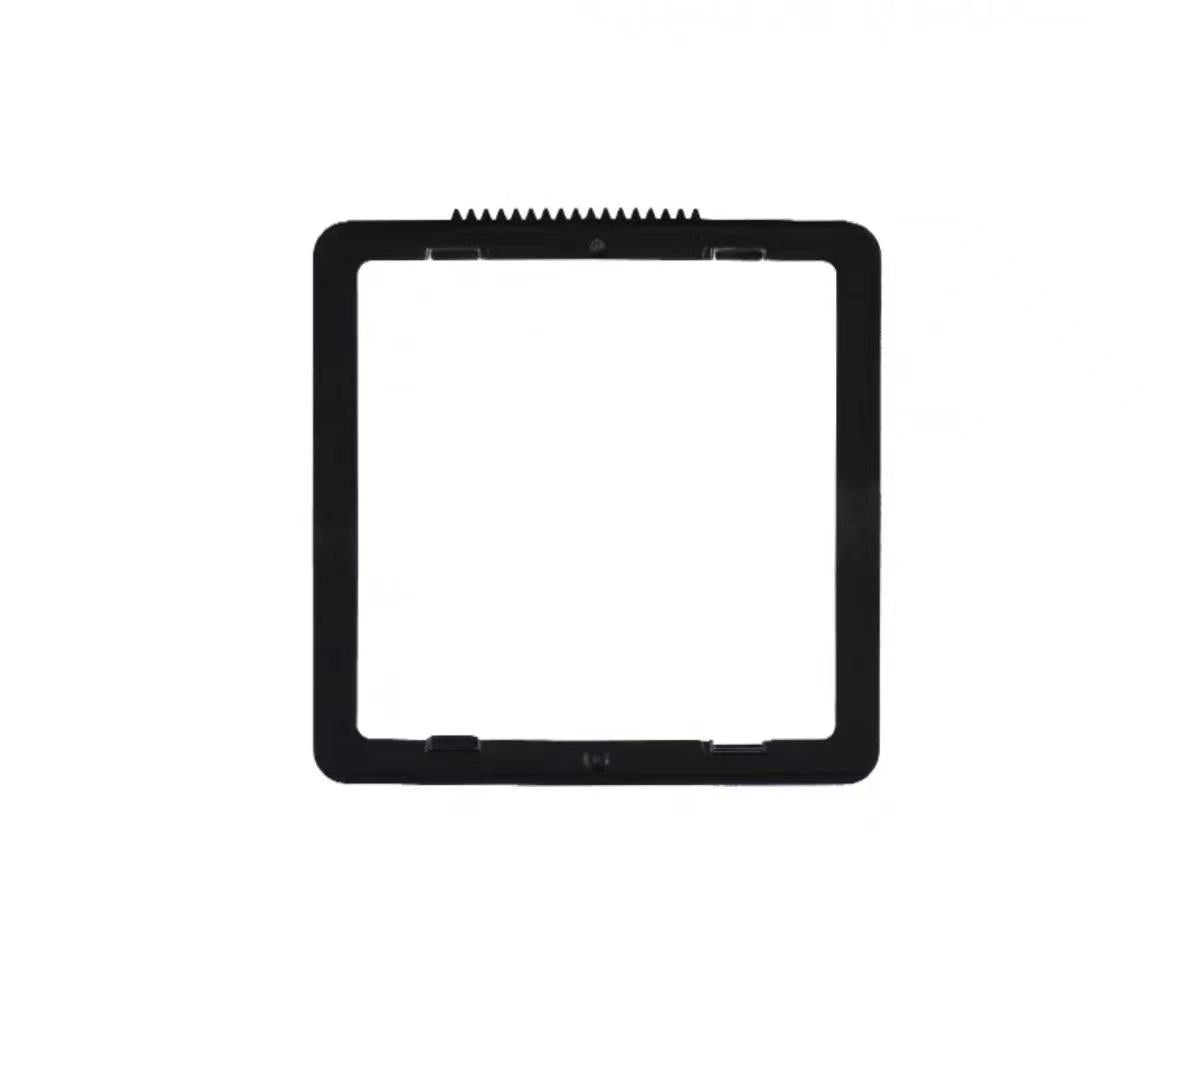 BENRO Aureole Filter Kit Video Filter Holder Modular 3-In-1 Embedded Clip-in Filter